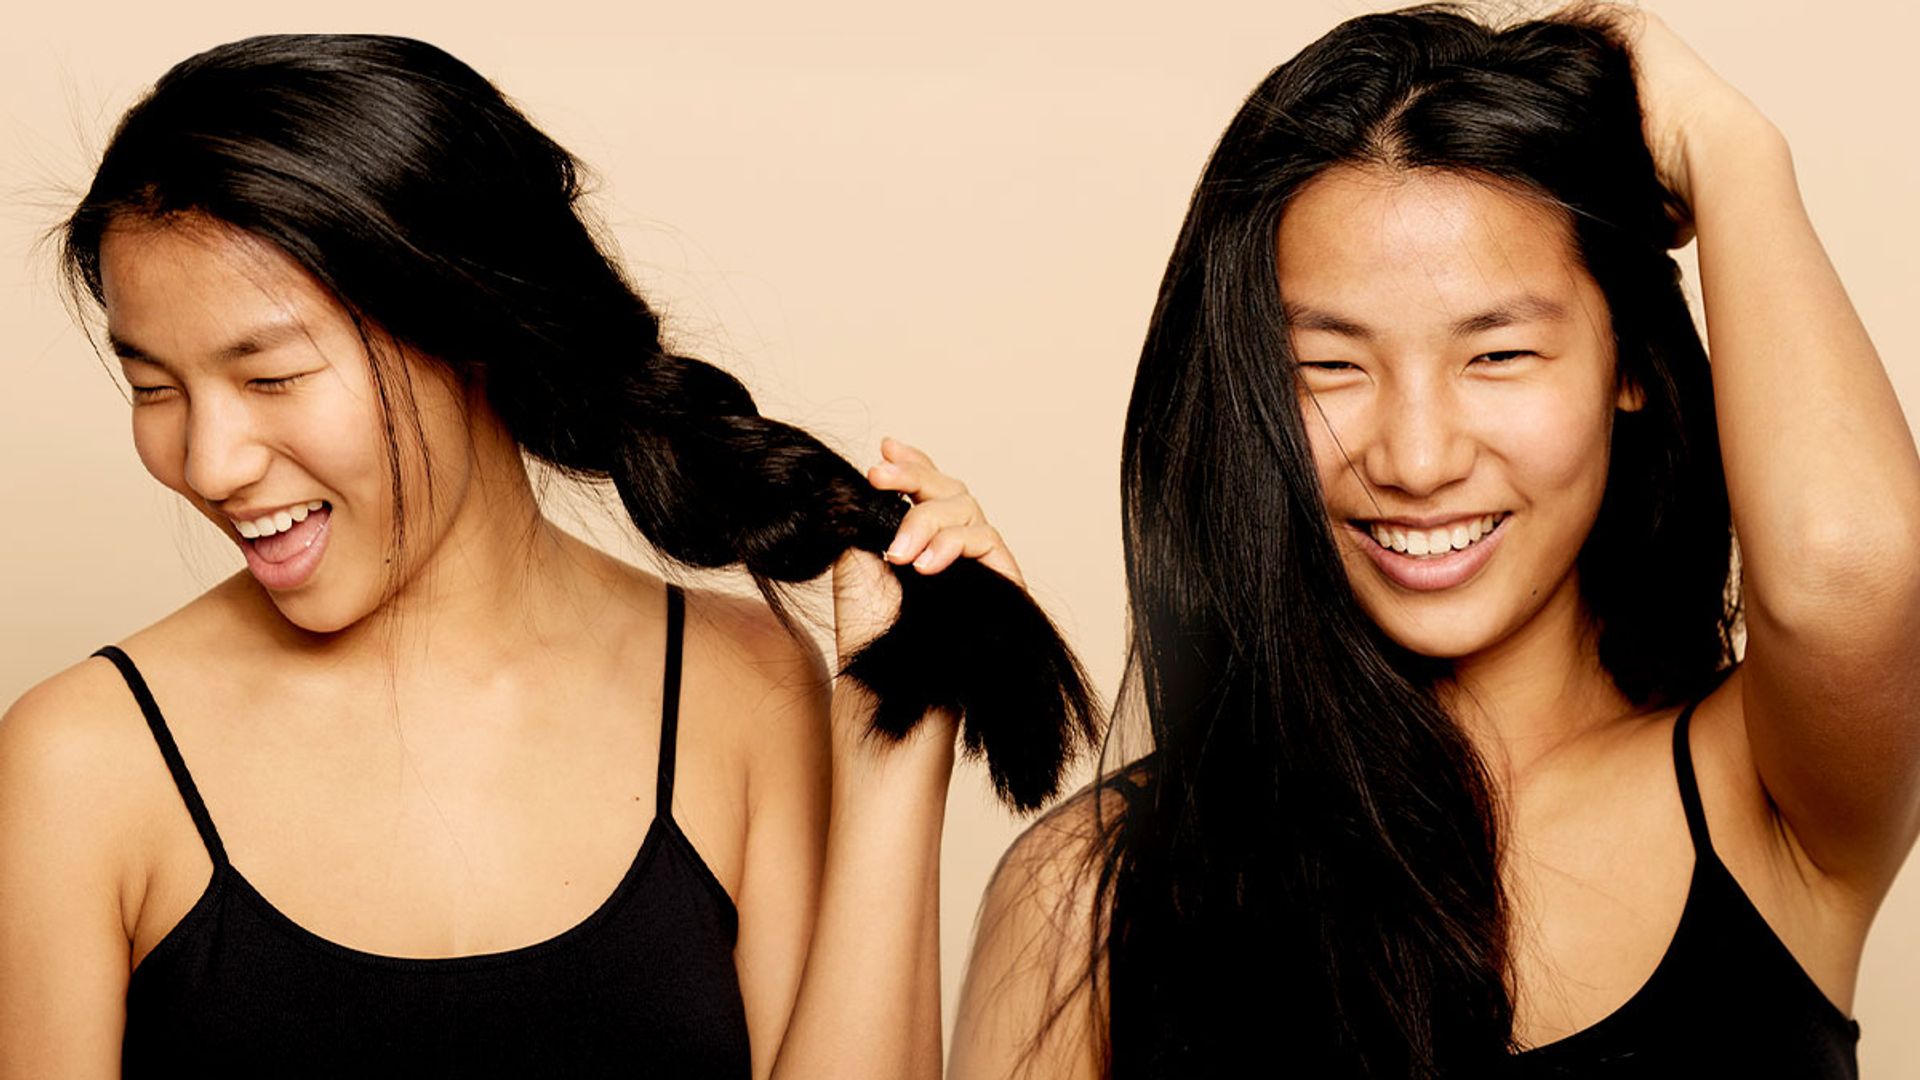 10 expert tips to make hair grow faster, stronger and longer